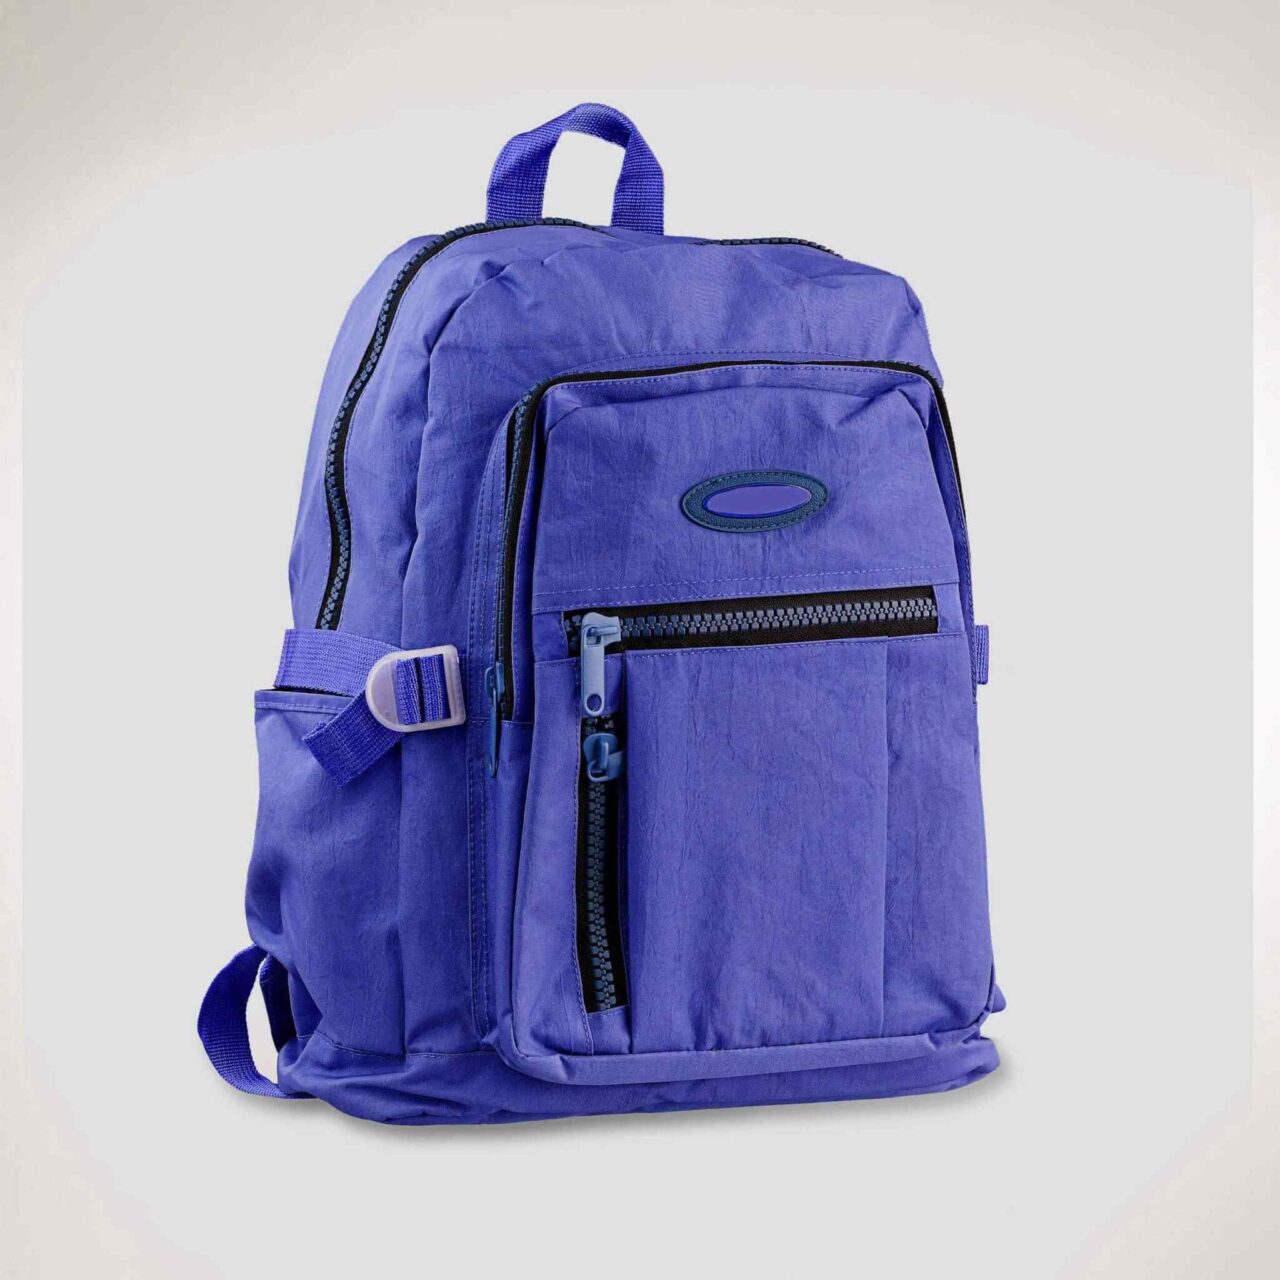 product-blue-backpack-1280x1280.jpg